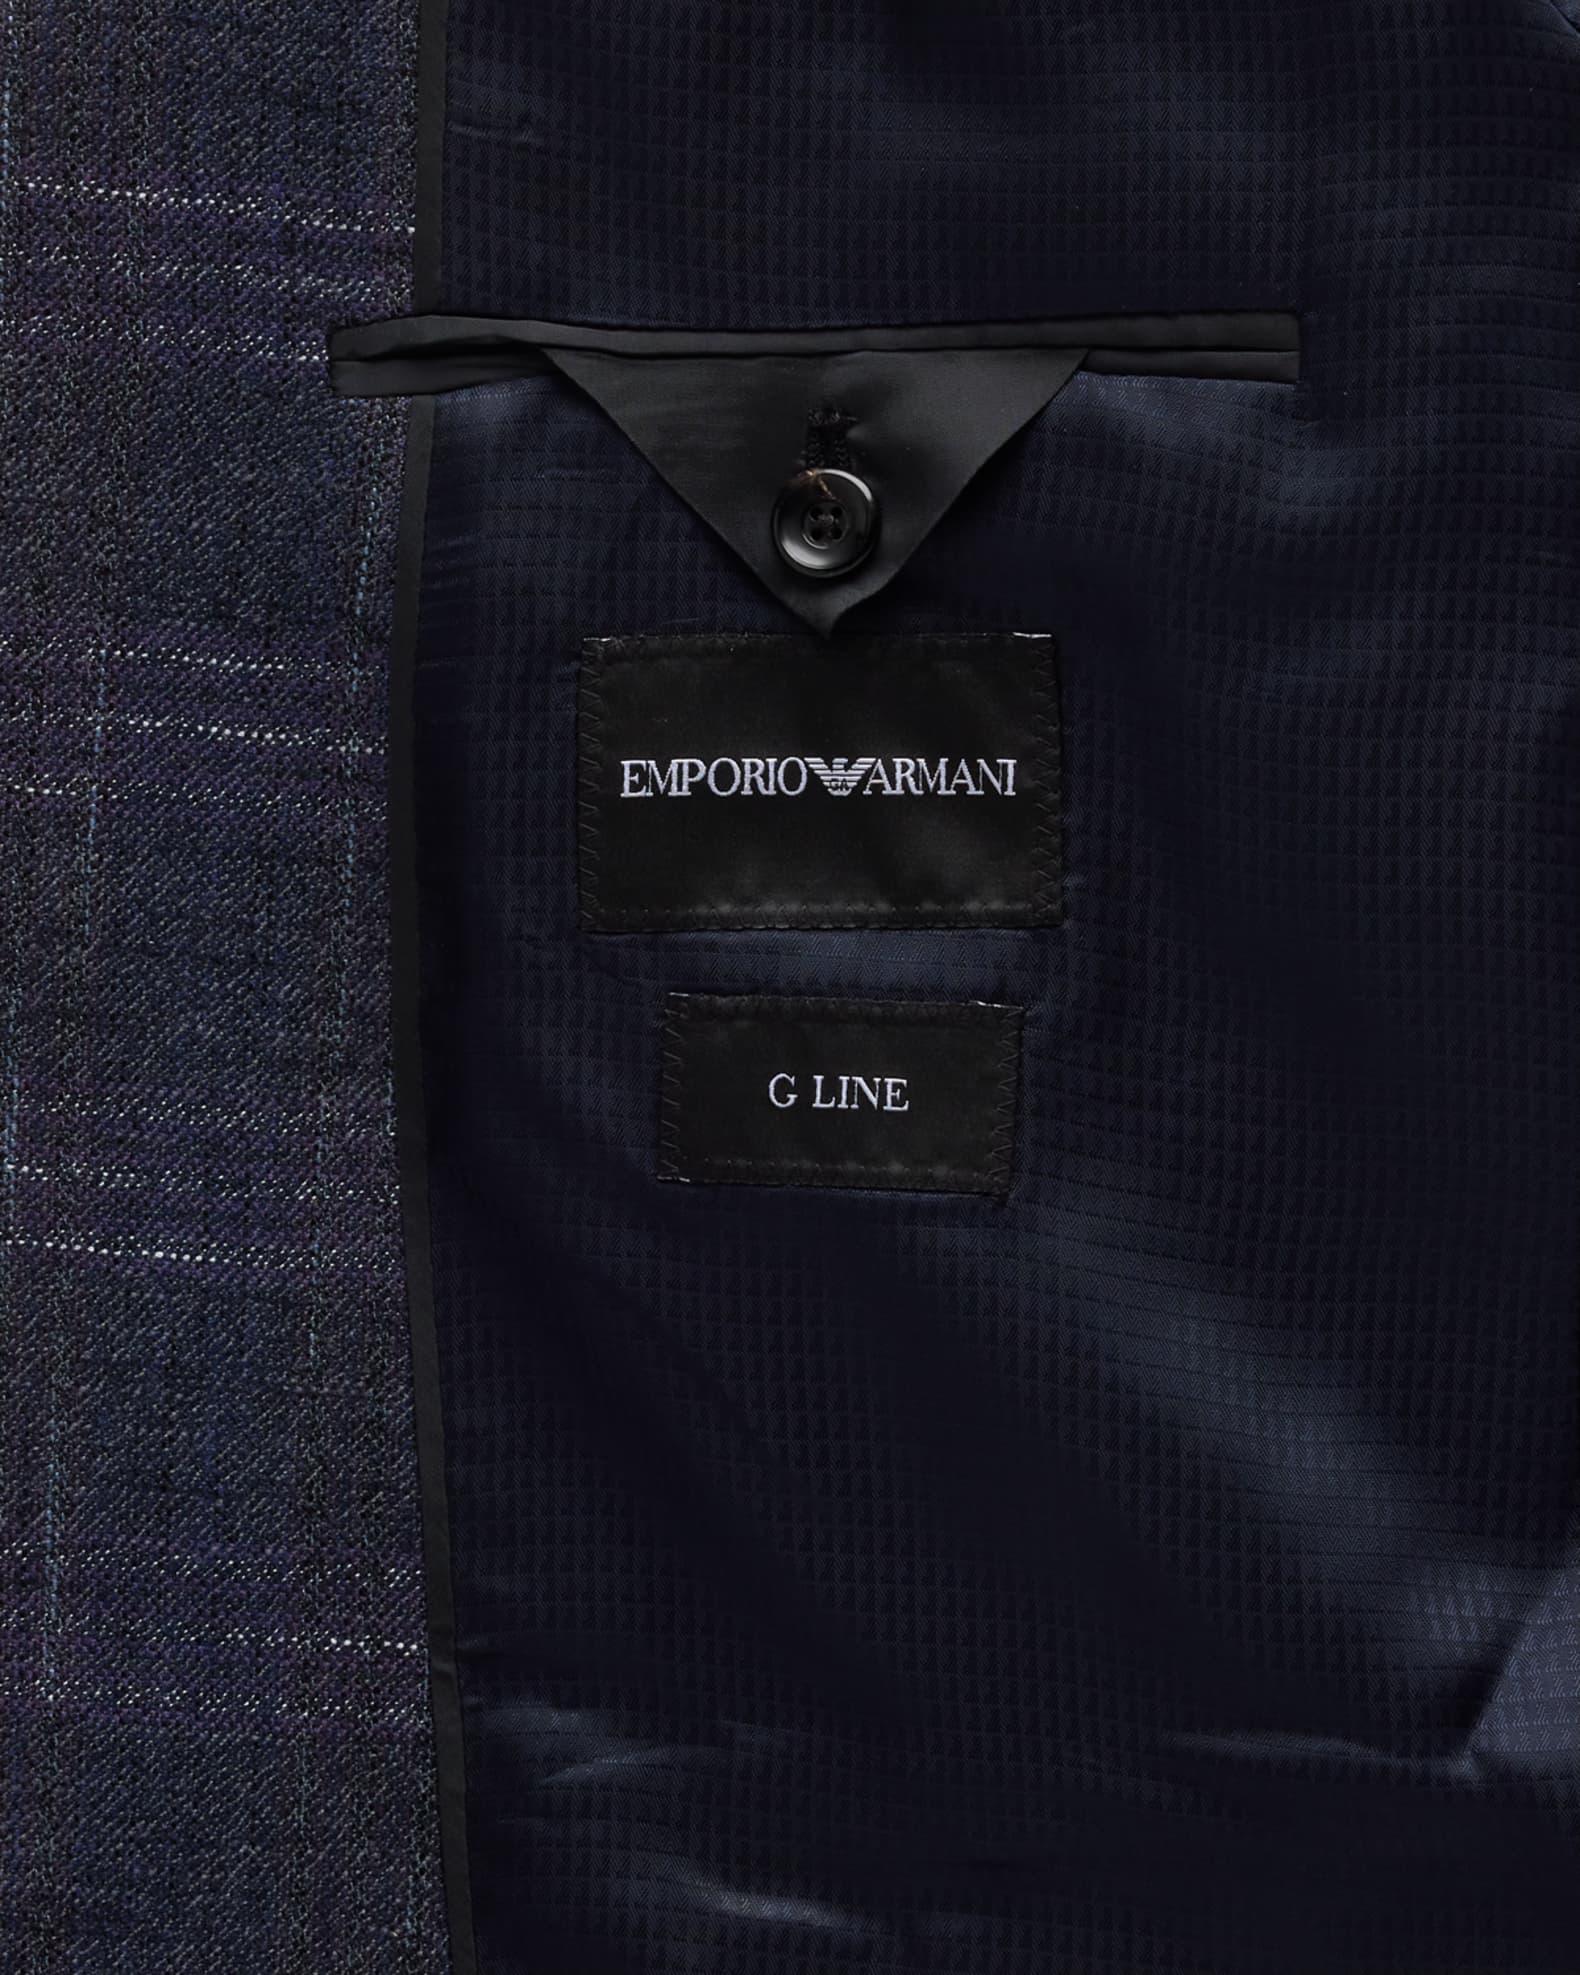 Emporio Armani Men's Plaid Wool-Blend Dinner Jacket | Neiman Marcus